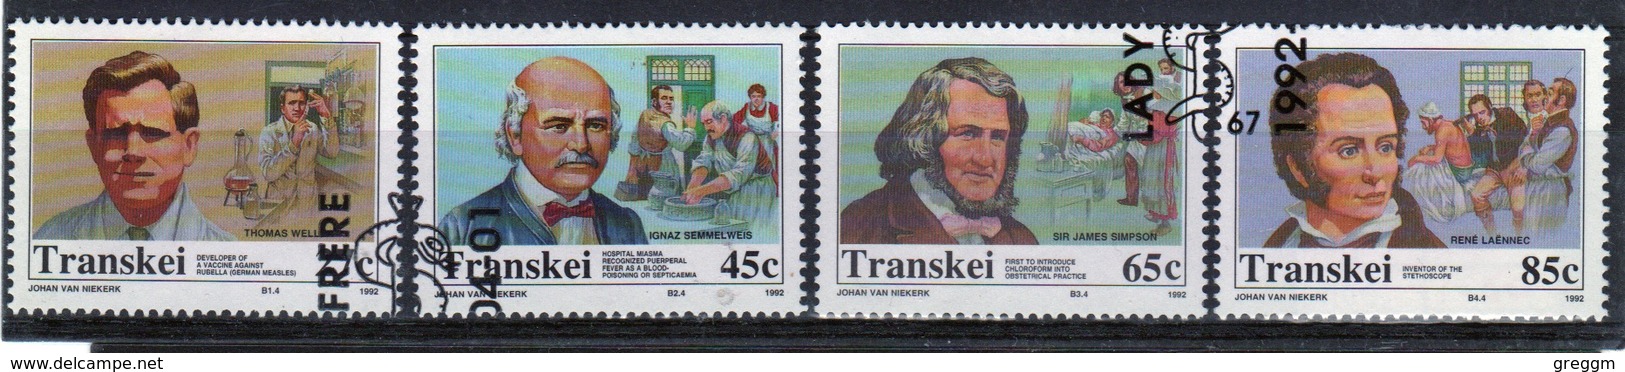 Transkei 1992 Set Of Stamps To Celebrate Celebrities Of Medicine 7th Series. - Transkei